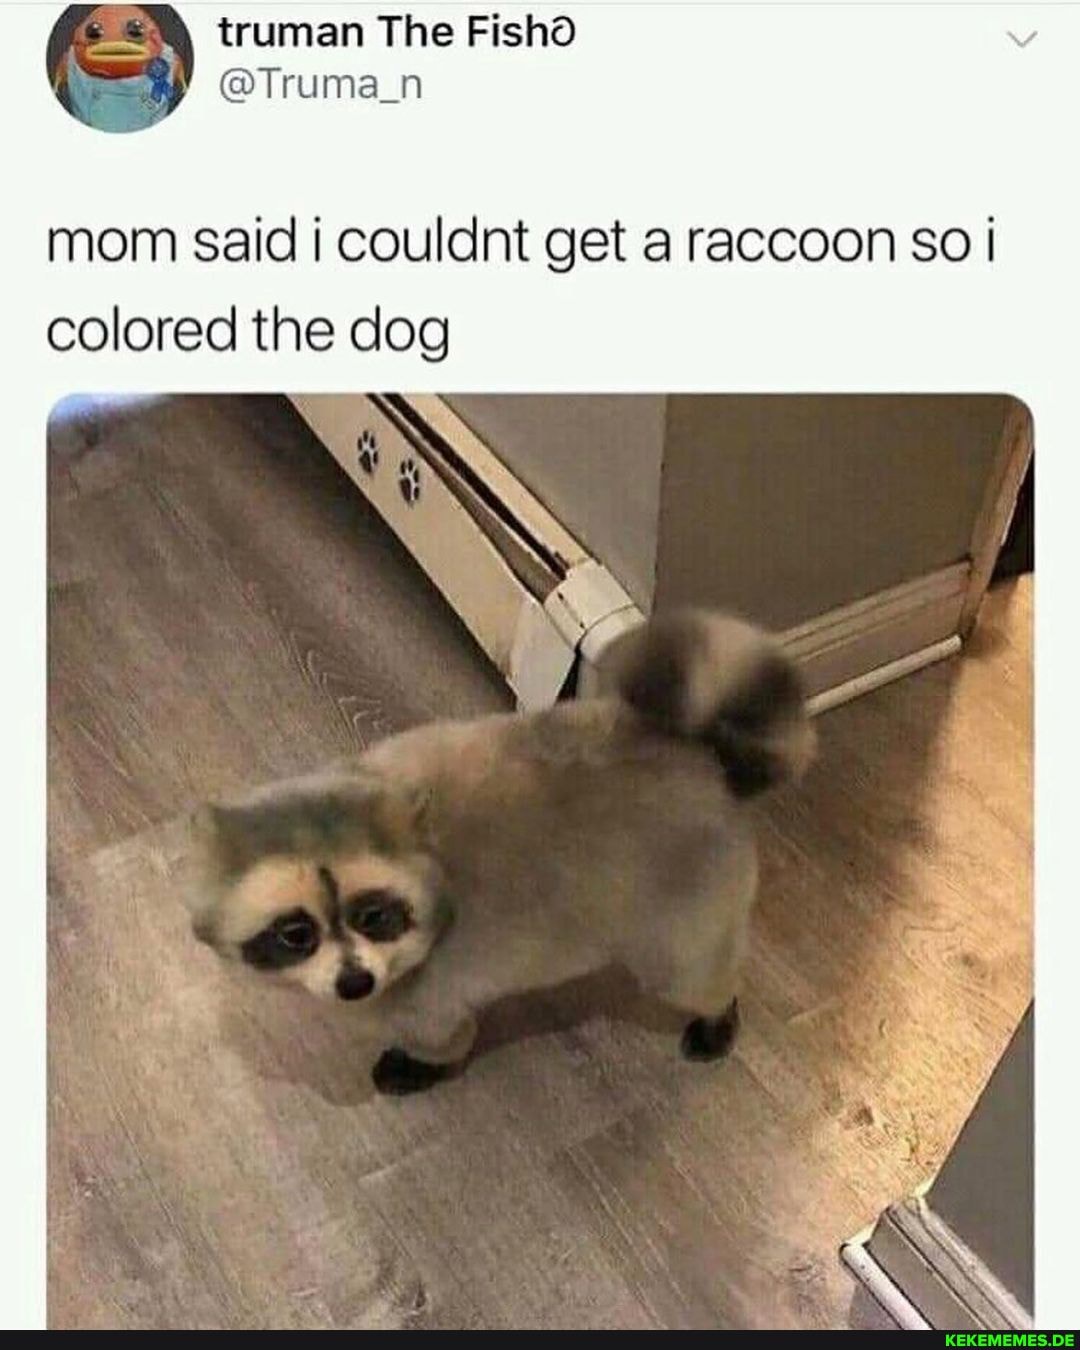 truman The Fishd @Truma_n mom said couldnt get a raccoon so I colored the dog